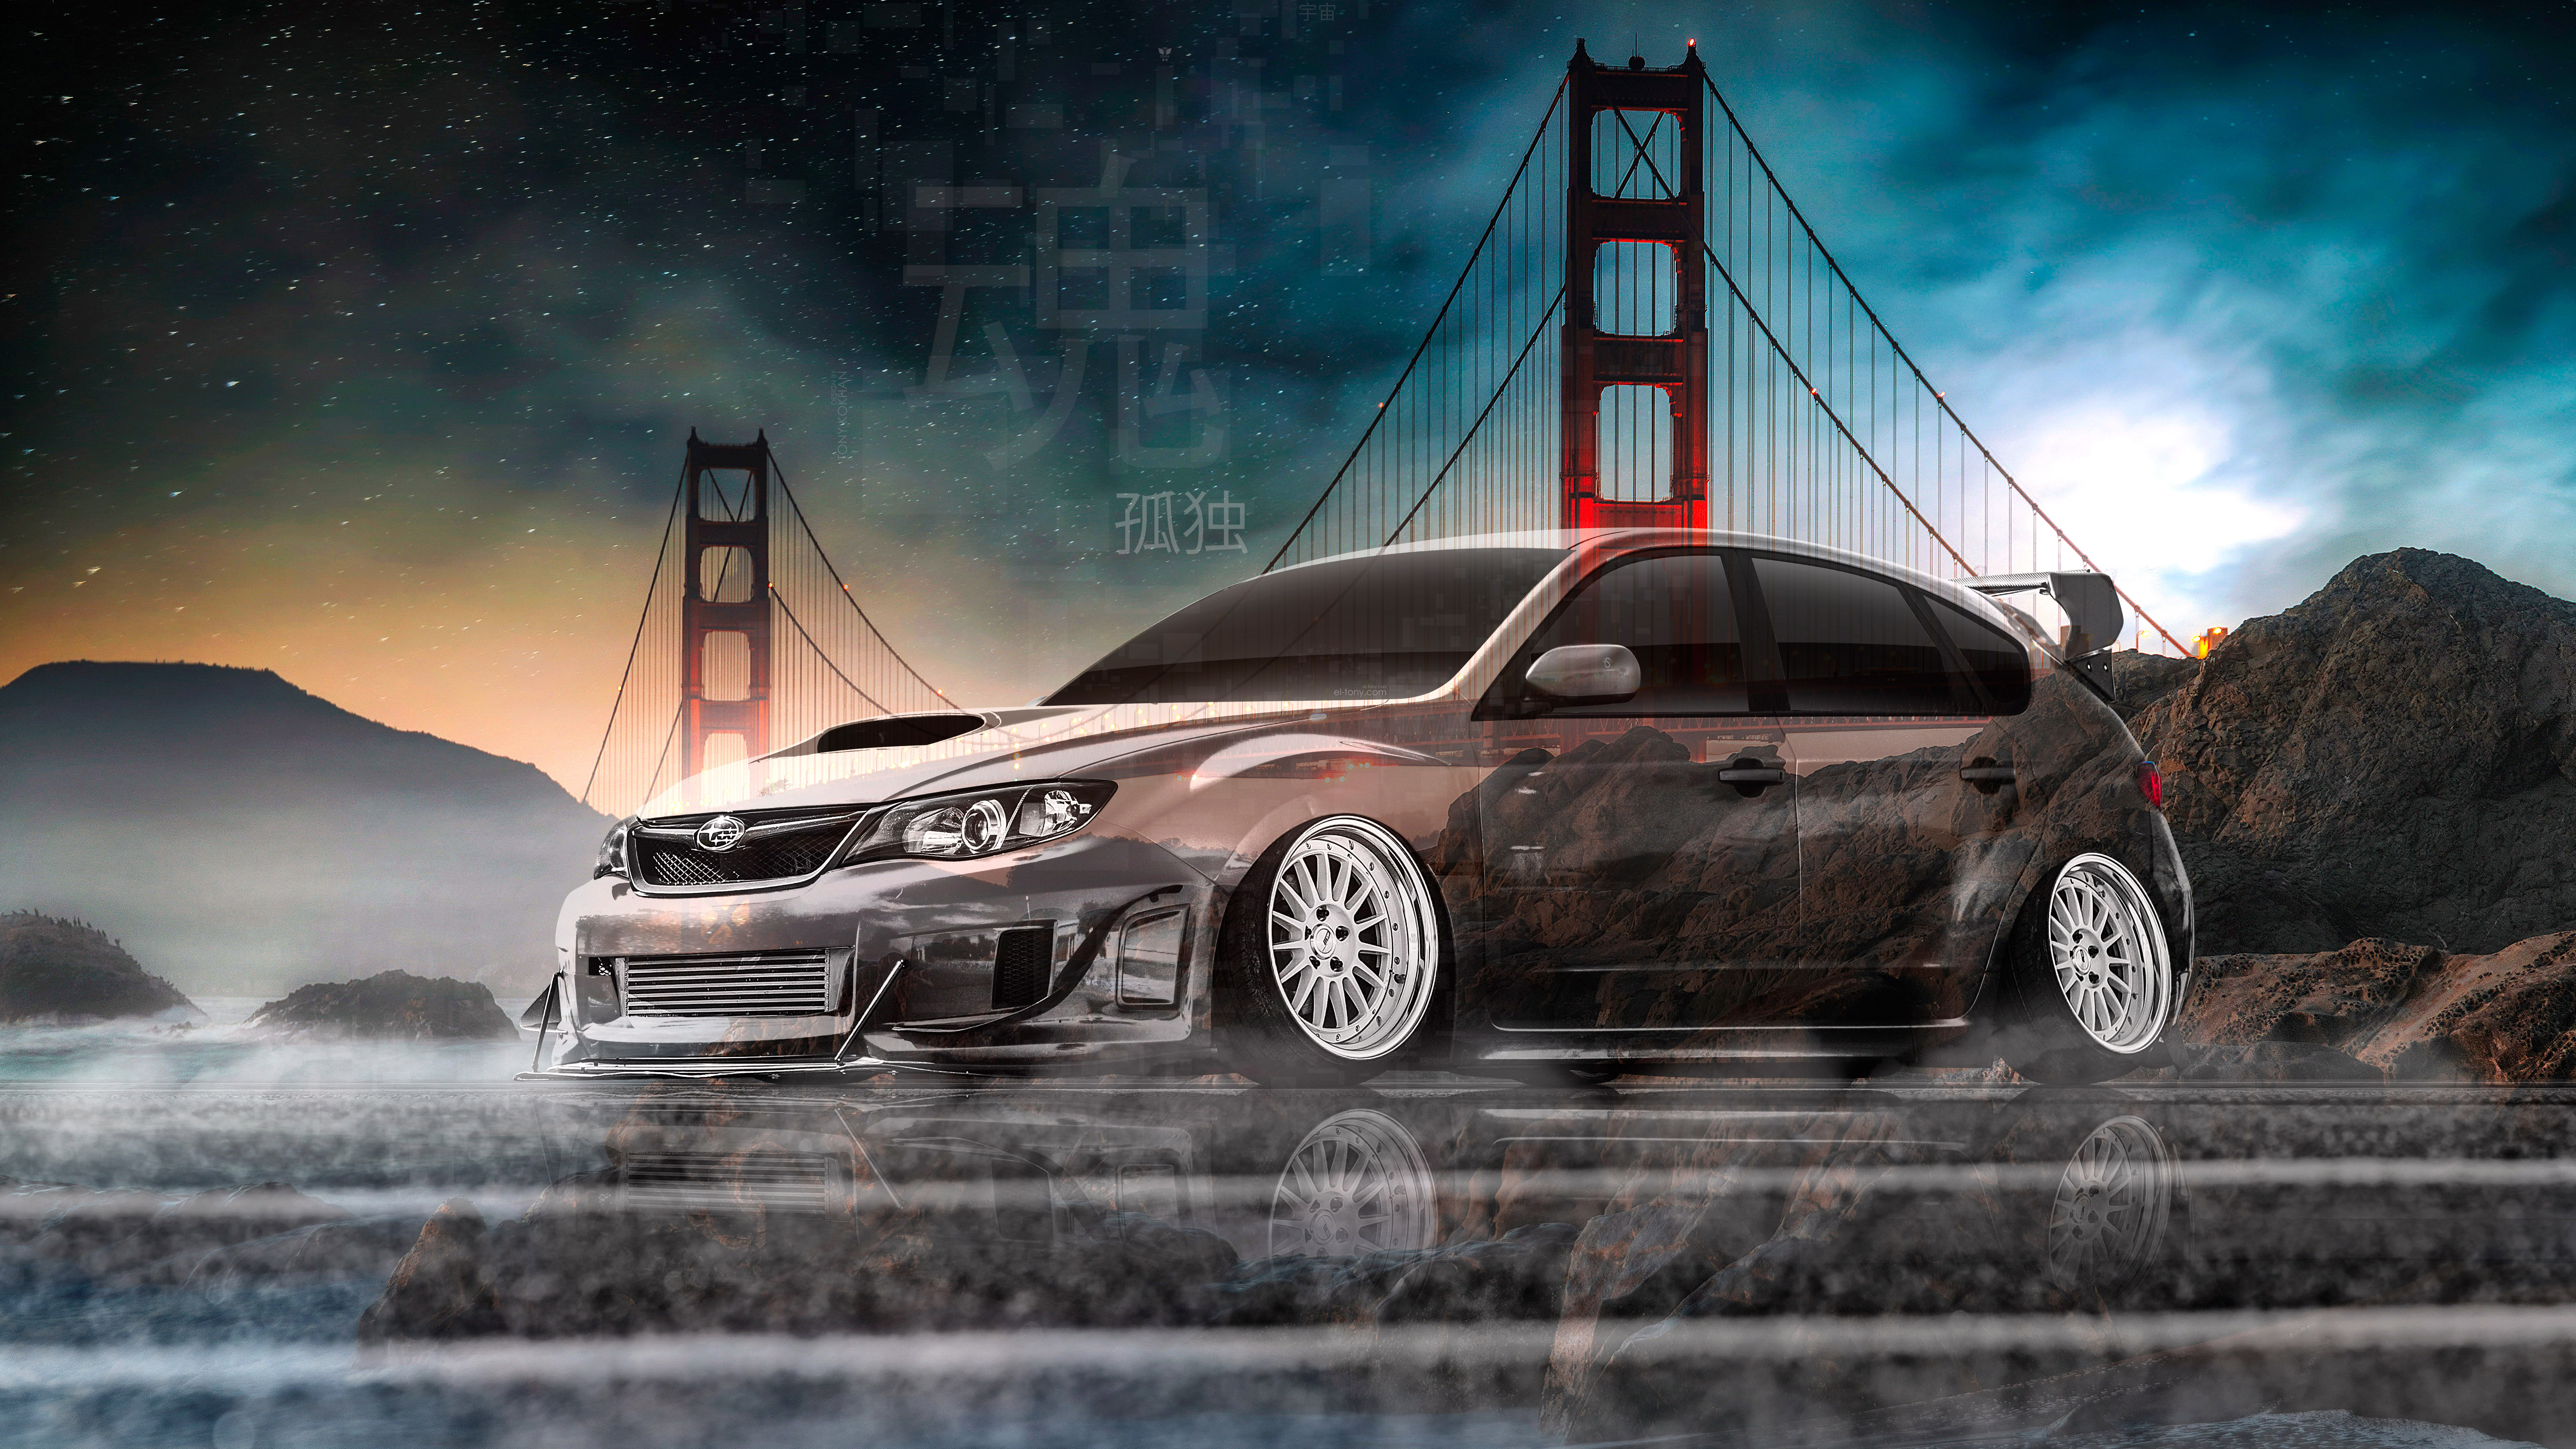 Subaru-Impreza-WRX-STI-JDM-Tuning-Super-Crystal-Soul-Loneliness-Golden-Gate-Bridge-San-Francisco-City-Art-Car-